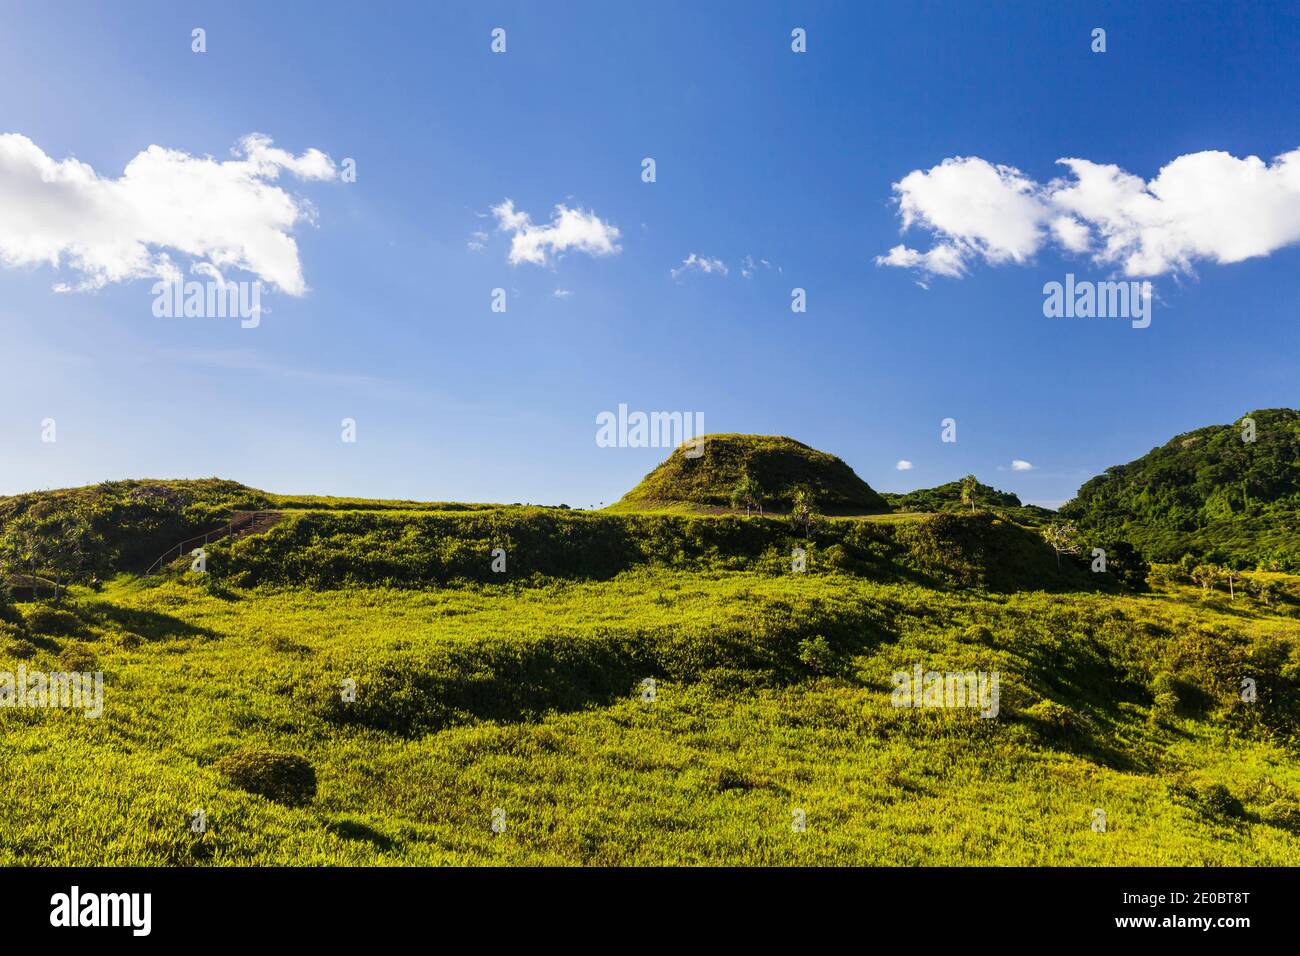 Ked Ra Ngchemiangel, Kamyangel terrazze, semplicemente 'Ked' o 'terrazza', antica collina a schiera fatta dall'uomo, Isola di Babeldaob, Palau, Micronesia, Oceania Foto Stock